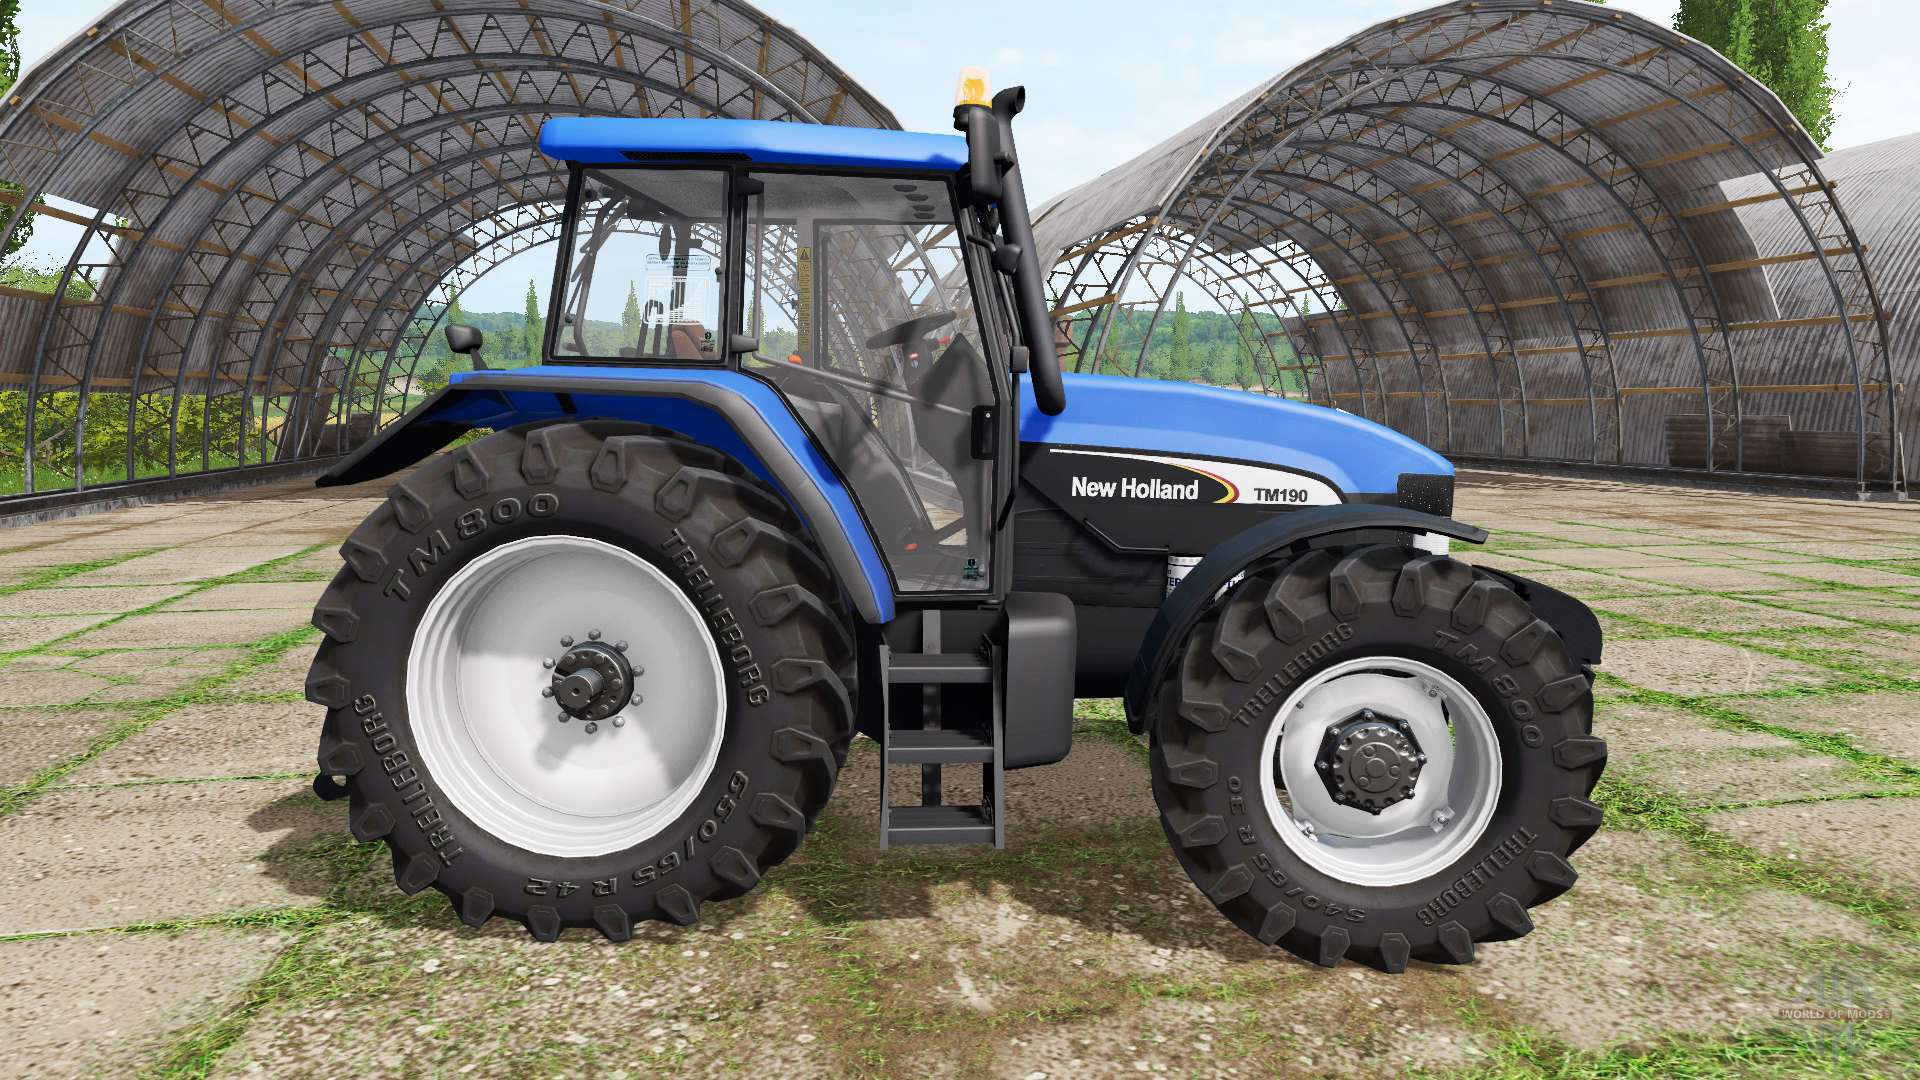 Трактора нью холланд (new holland) — модели, характеристики